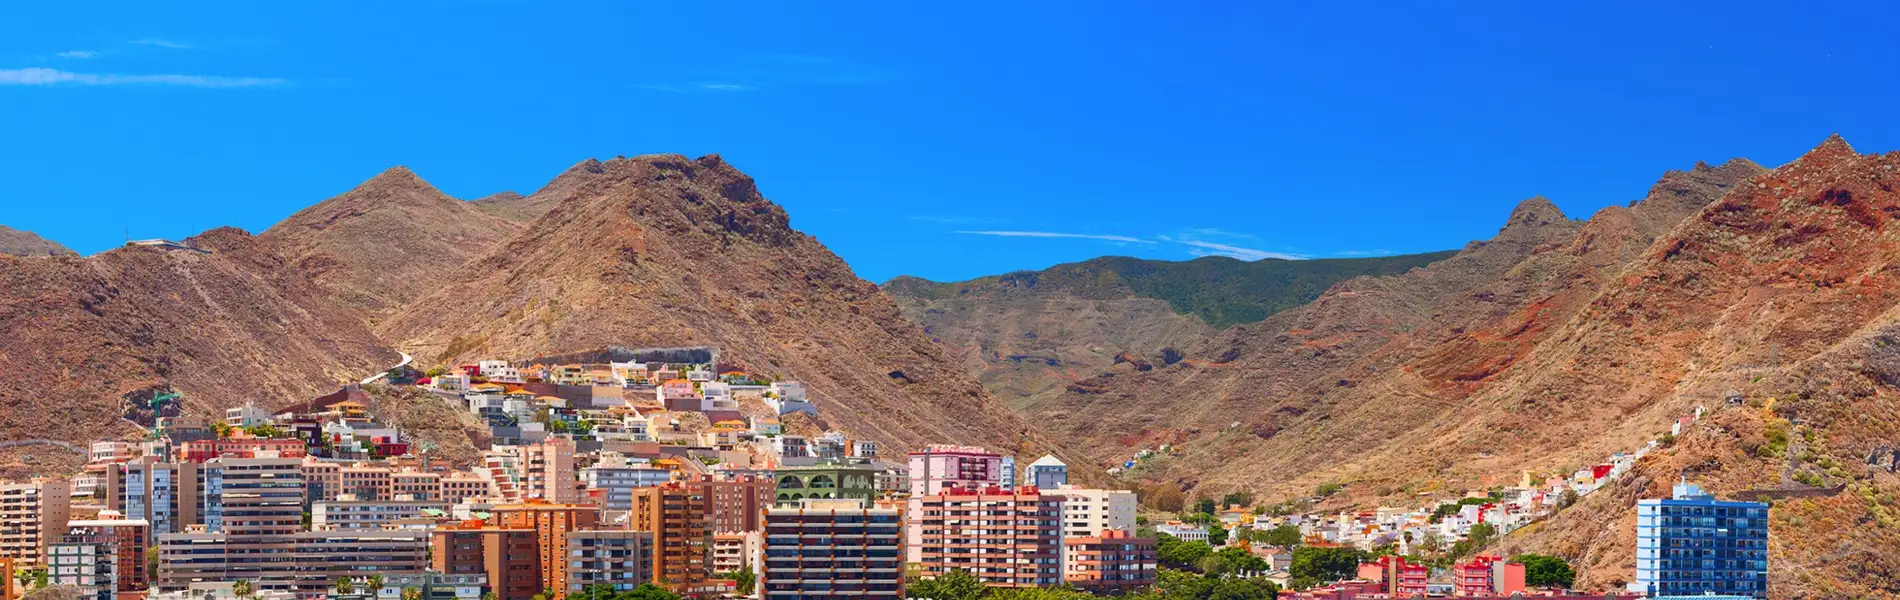 Santa Cruz, Tenerife (Spain)